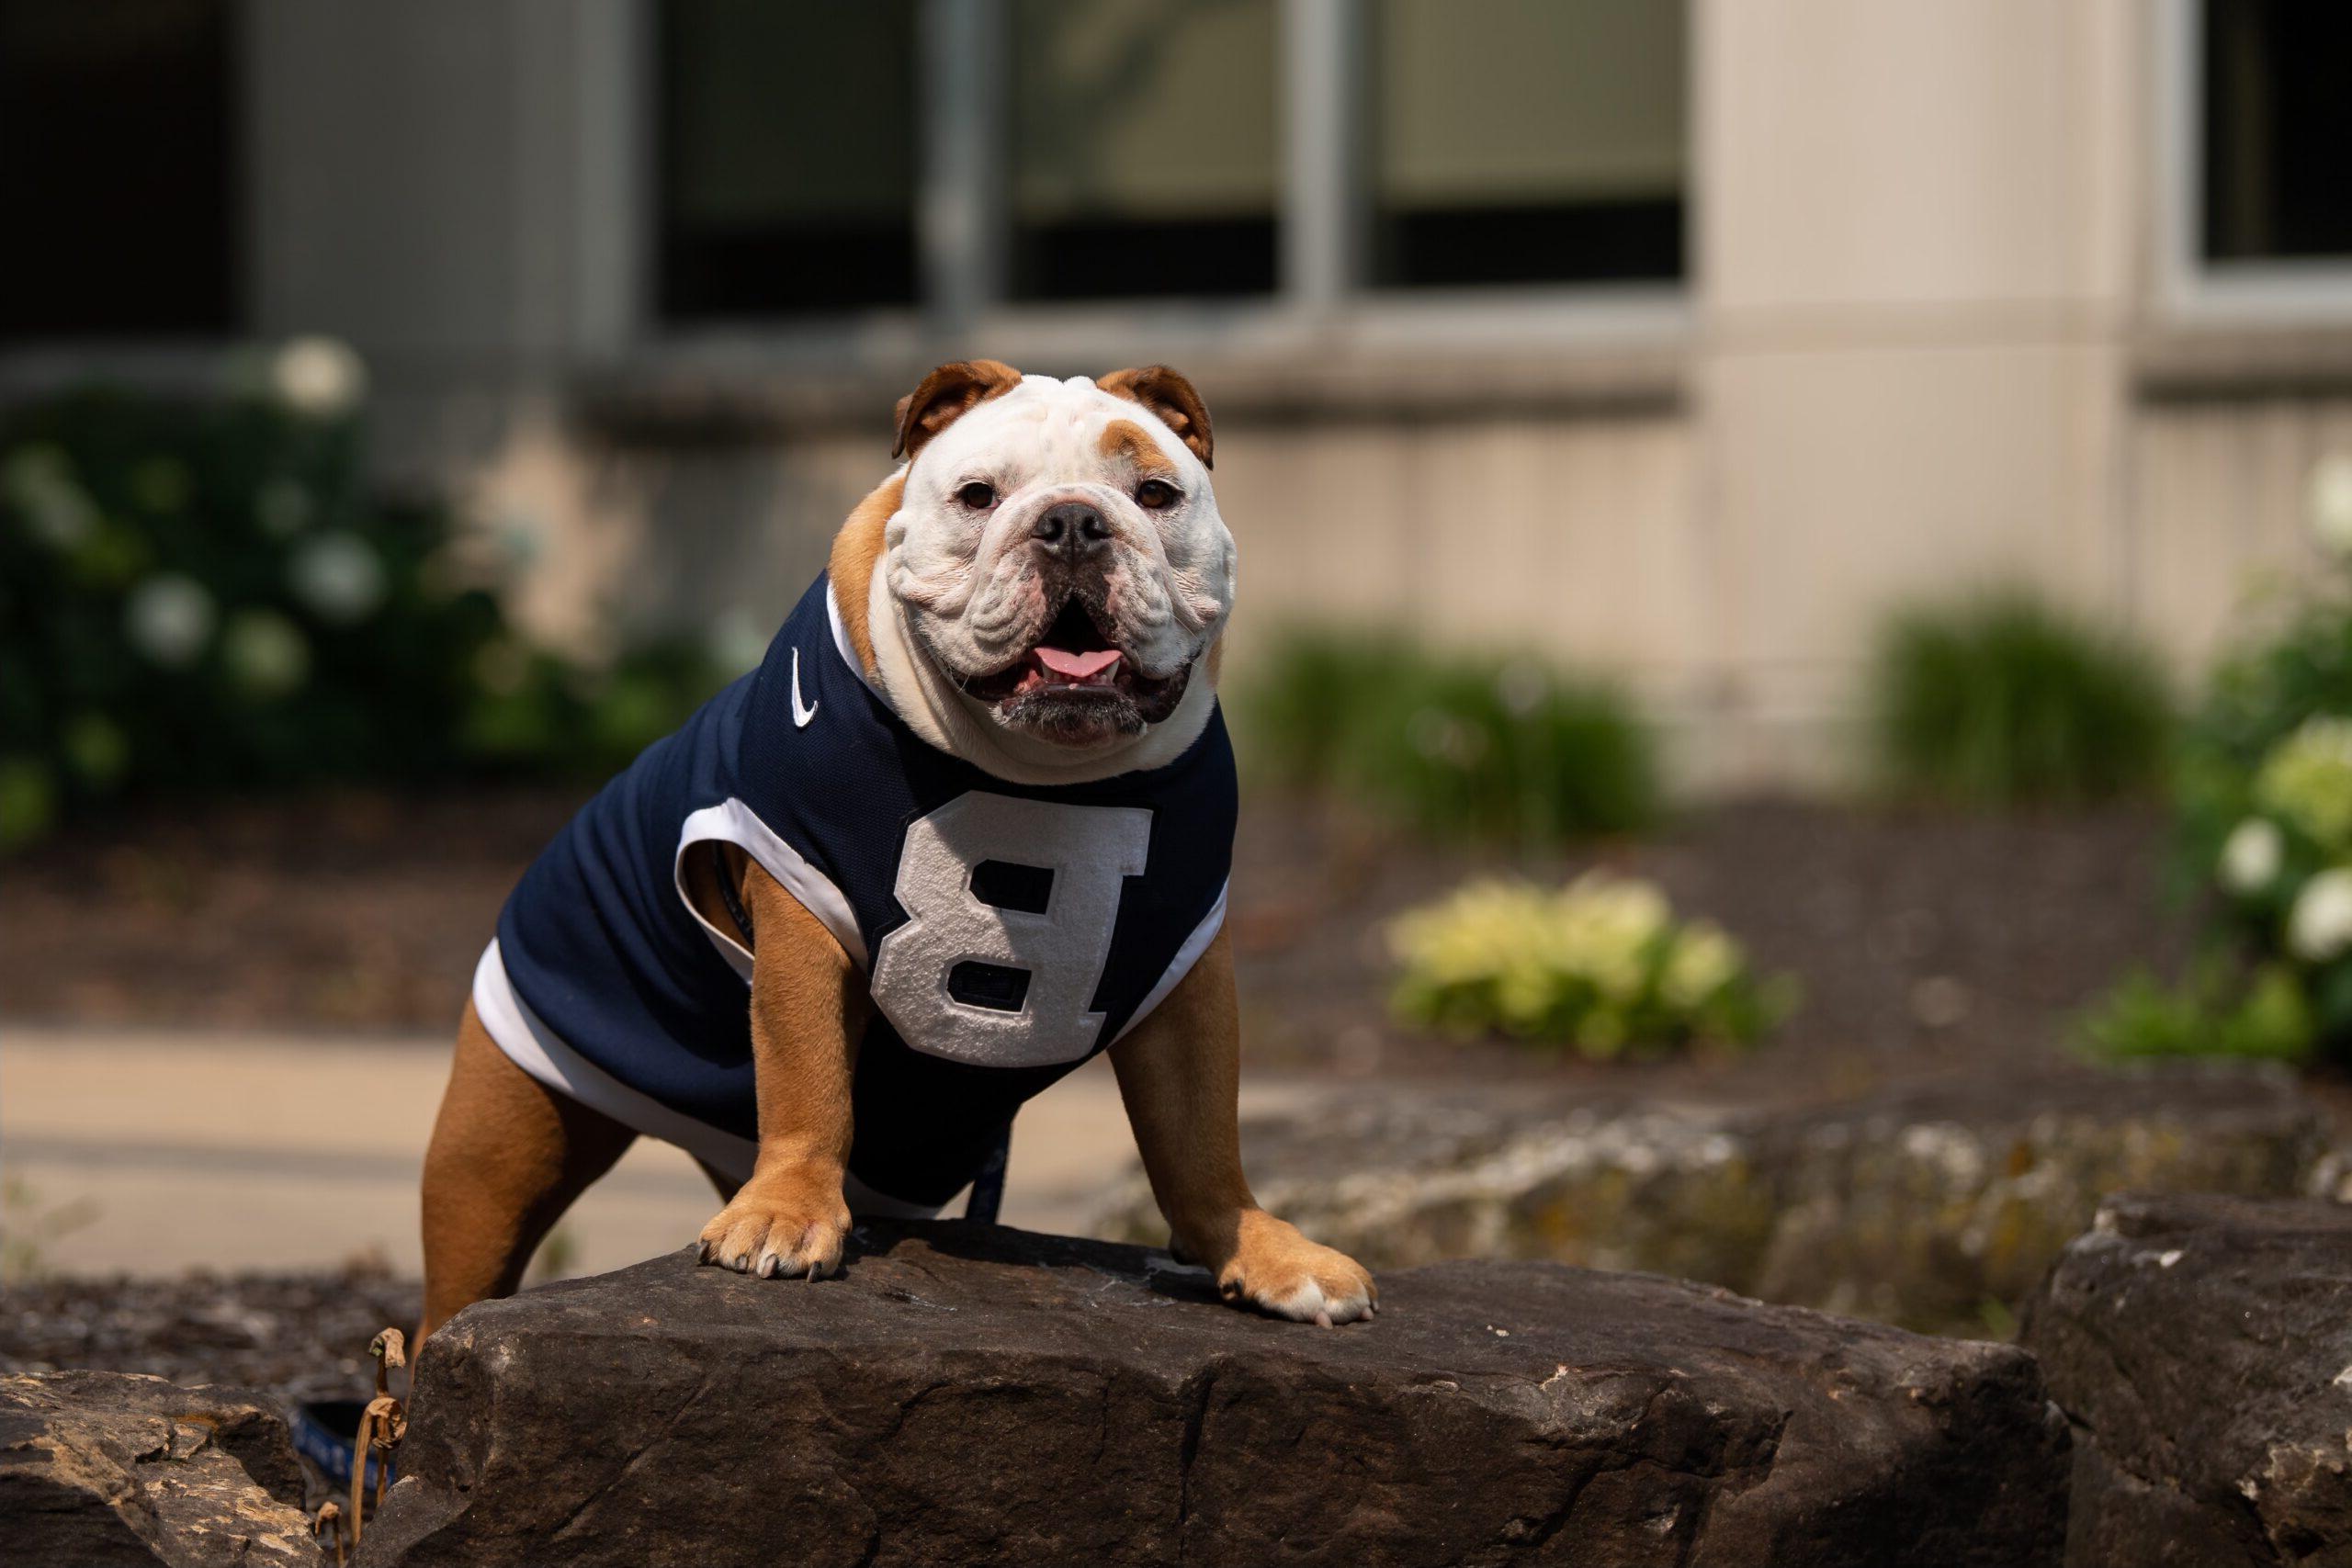 A bulldog wearing a Butler sweater perches on a rock